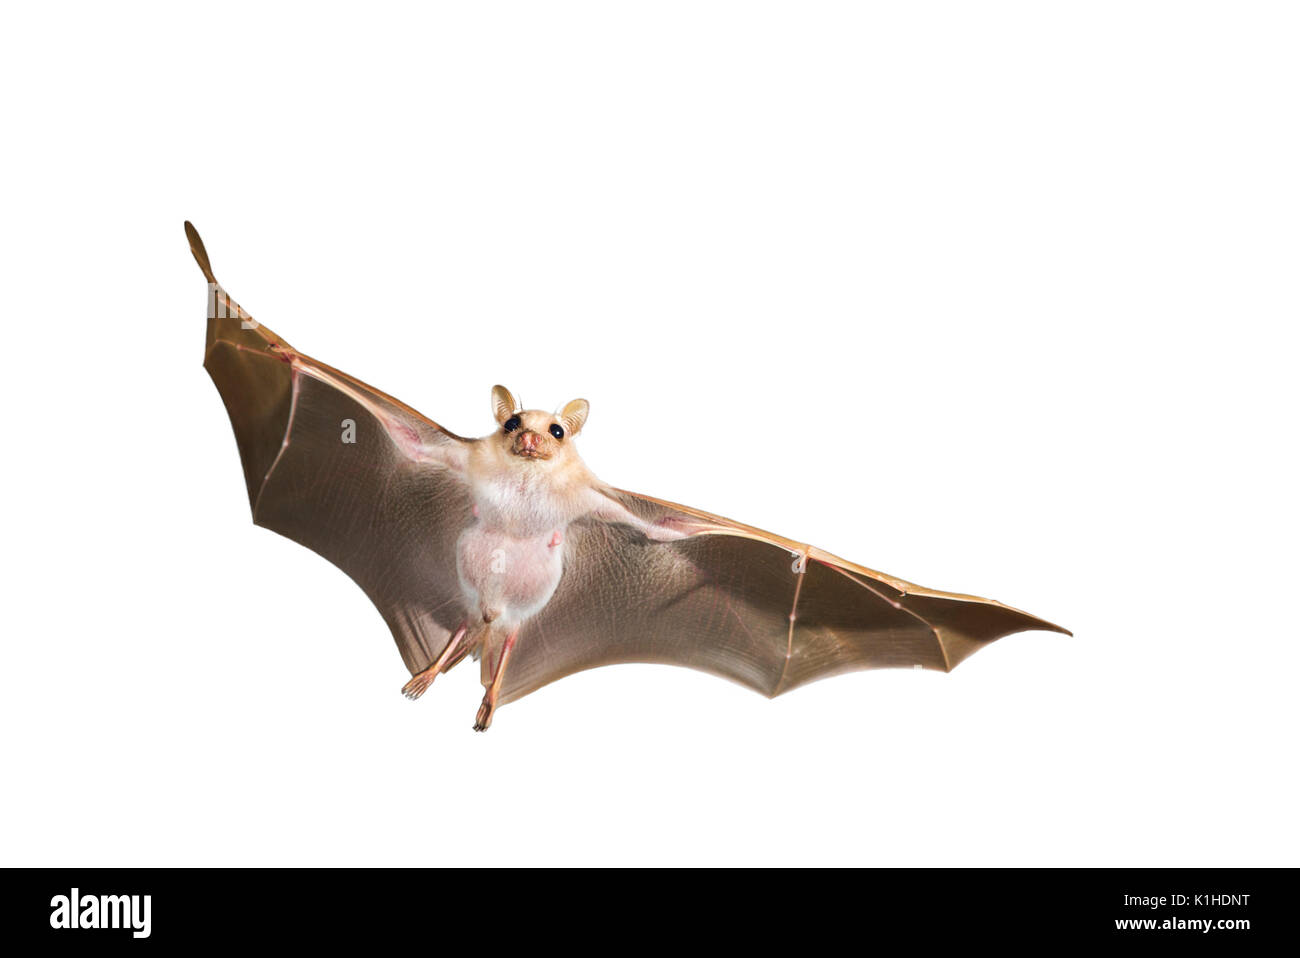 Peters' dwarf epauletted fruit bat (Micropteropus pusillus) flying, isolated on white background. Stock Photo